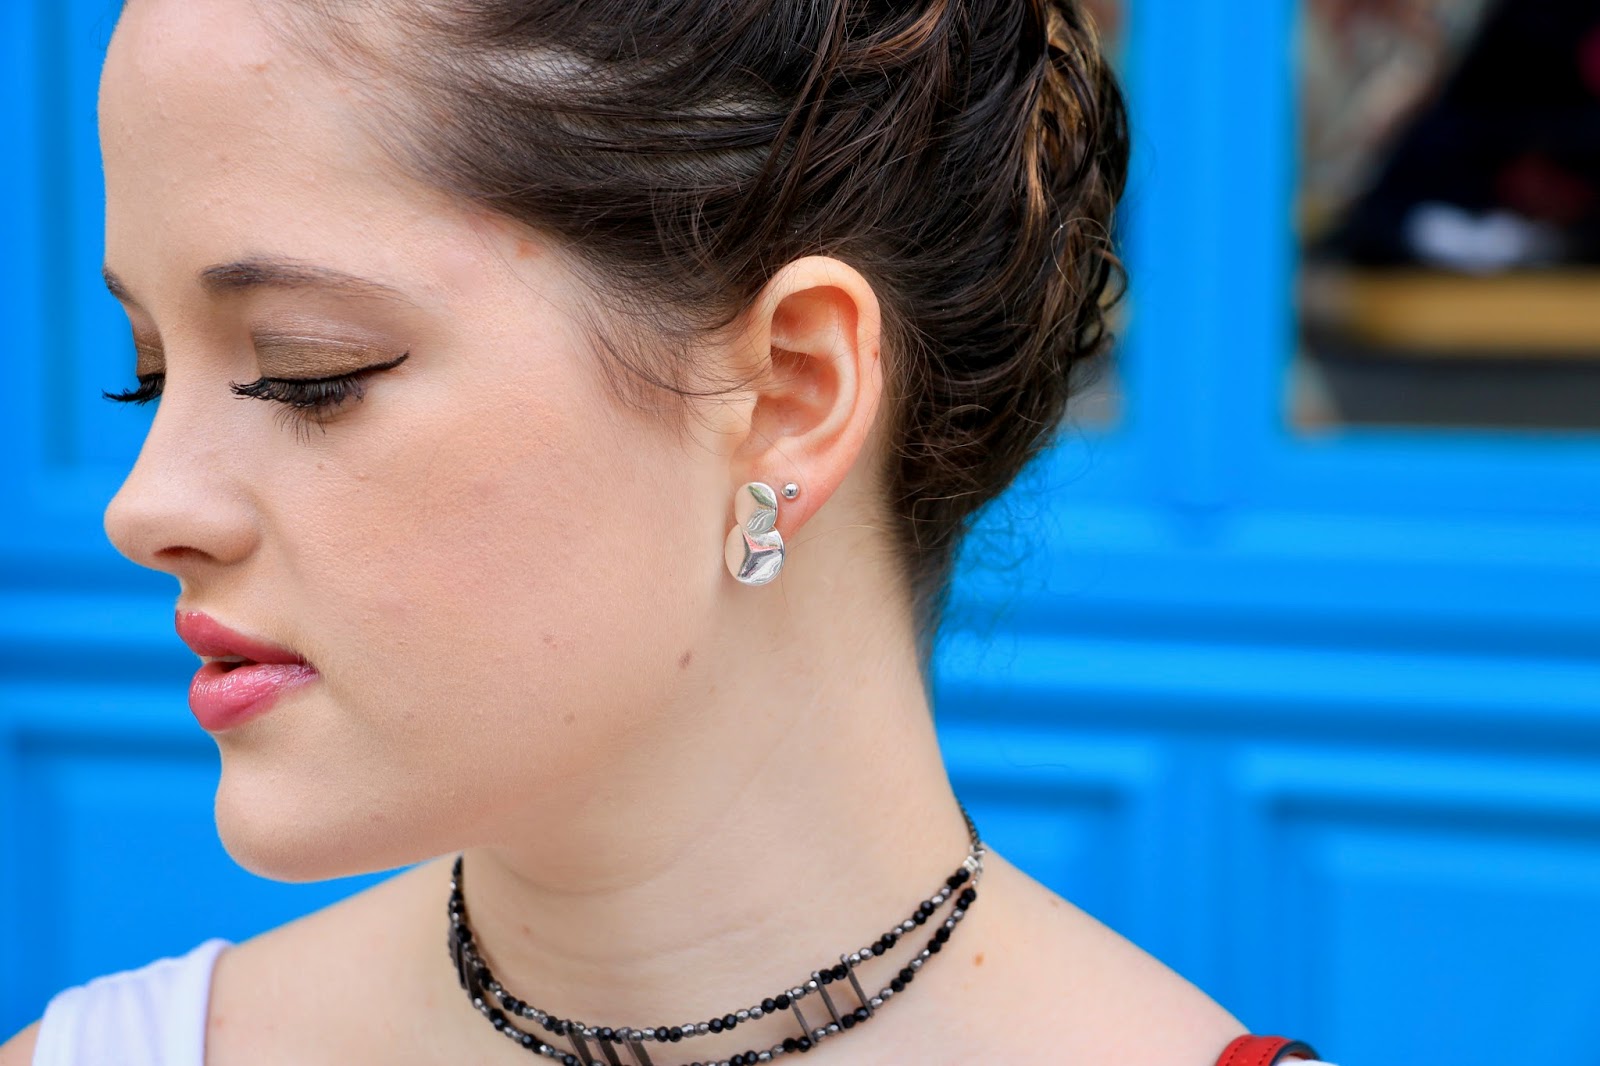 fashion blogger wearing silver earrings and choker